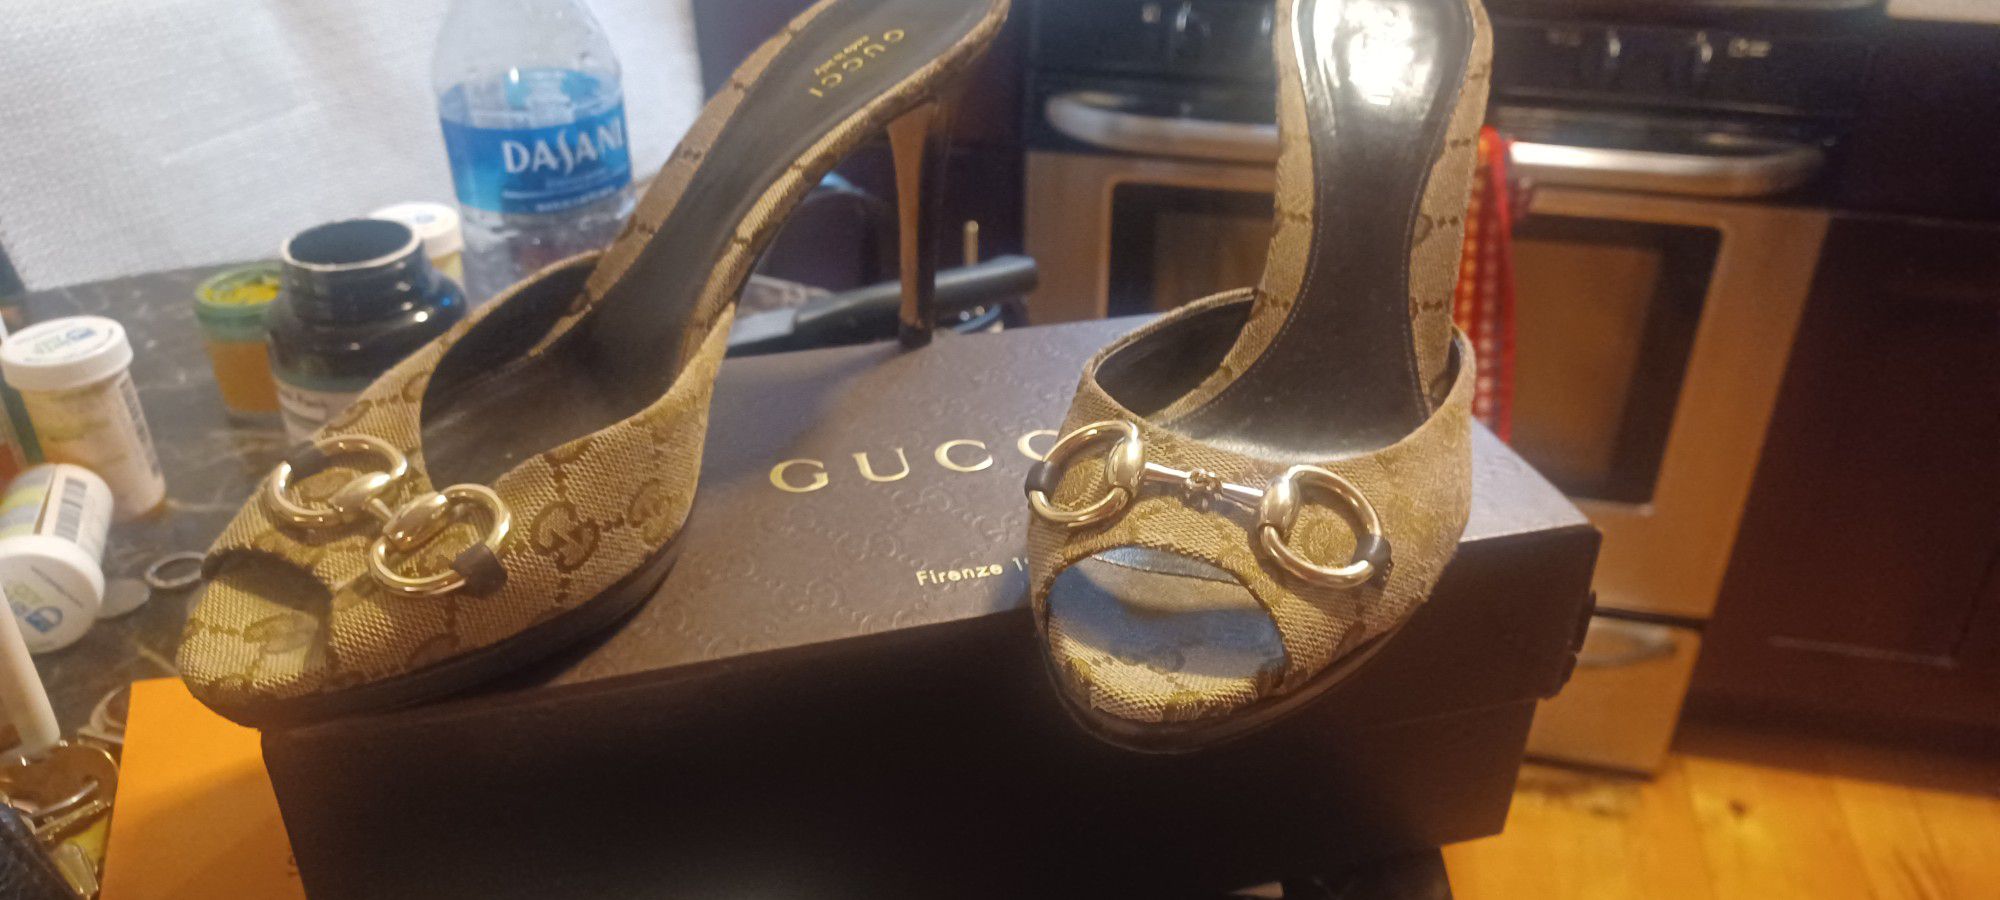 Gucci Slides With Original Box Authentic 